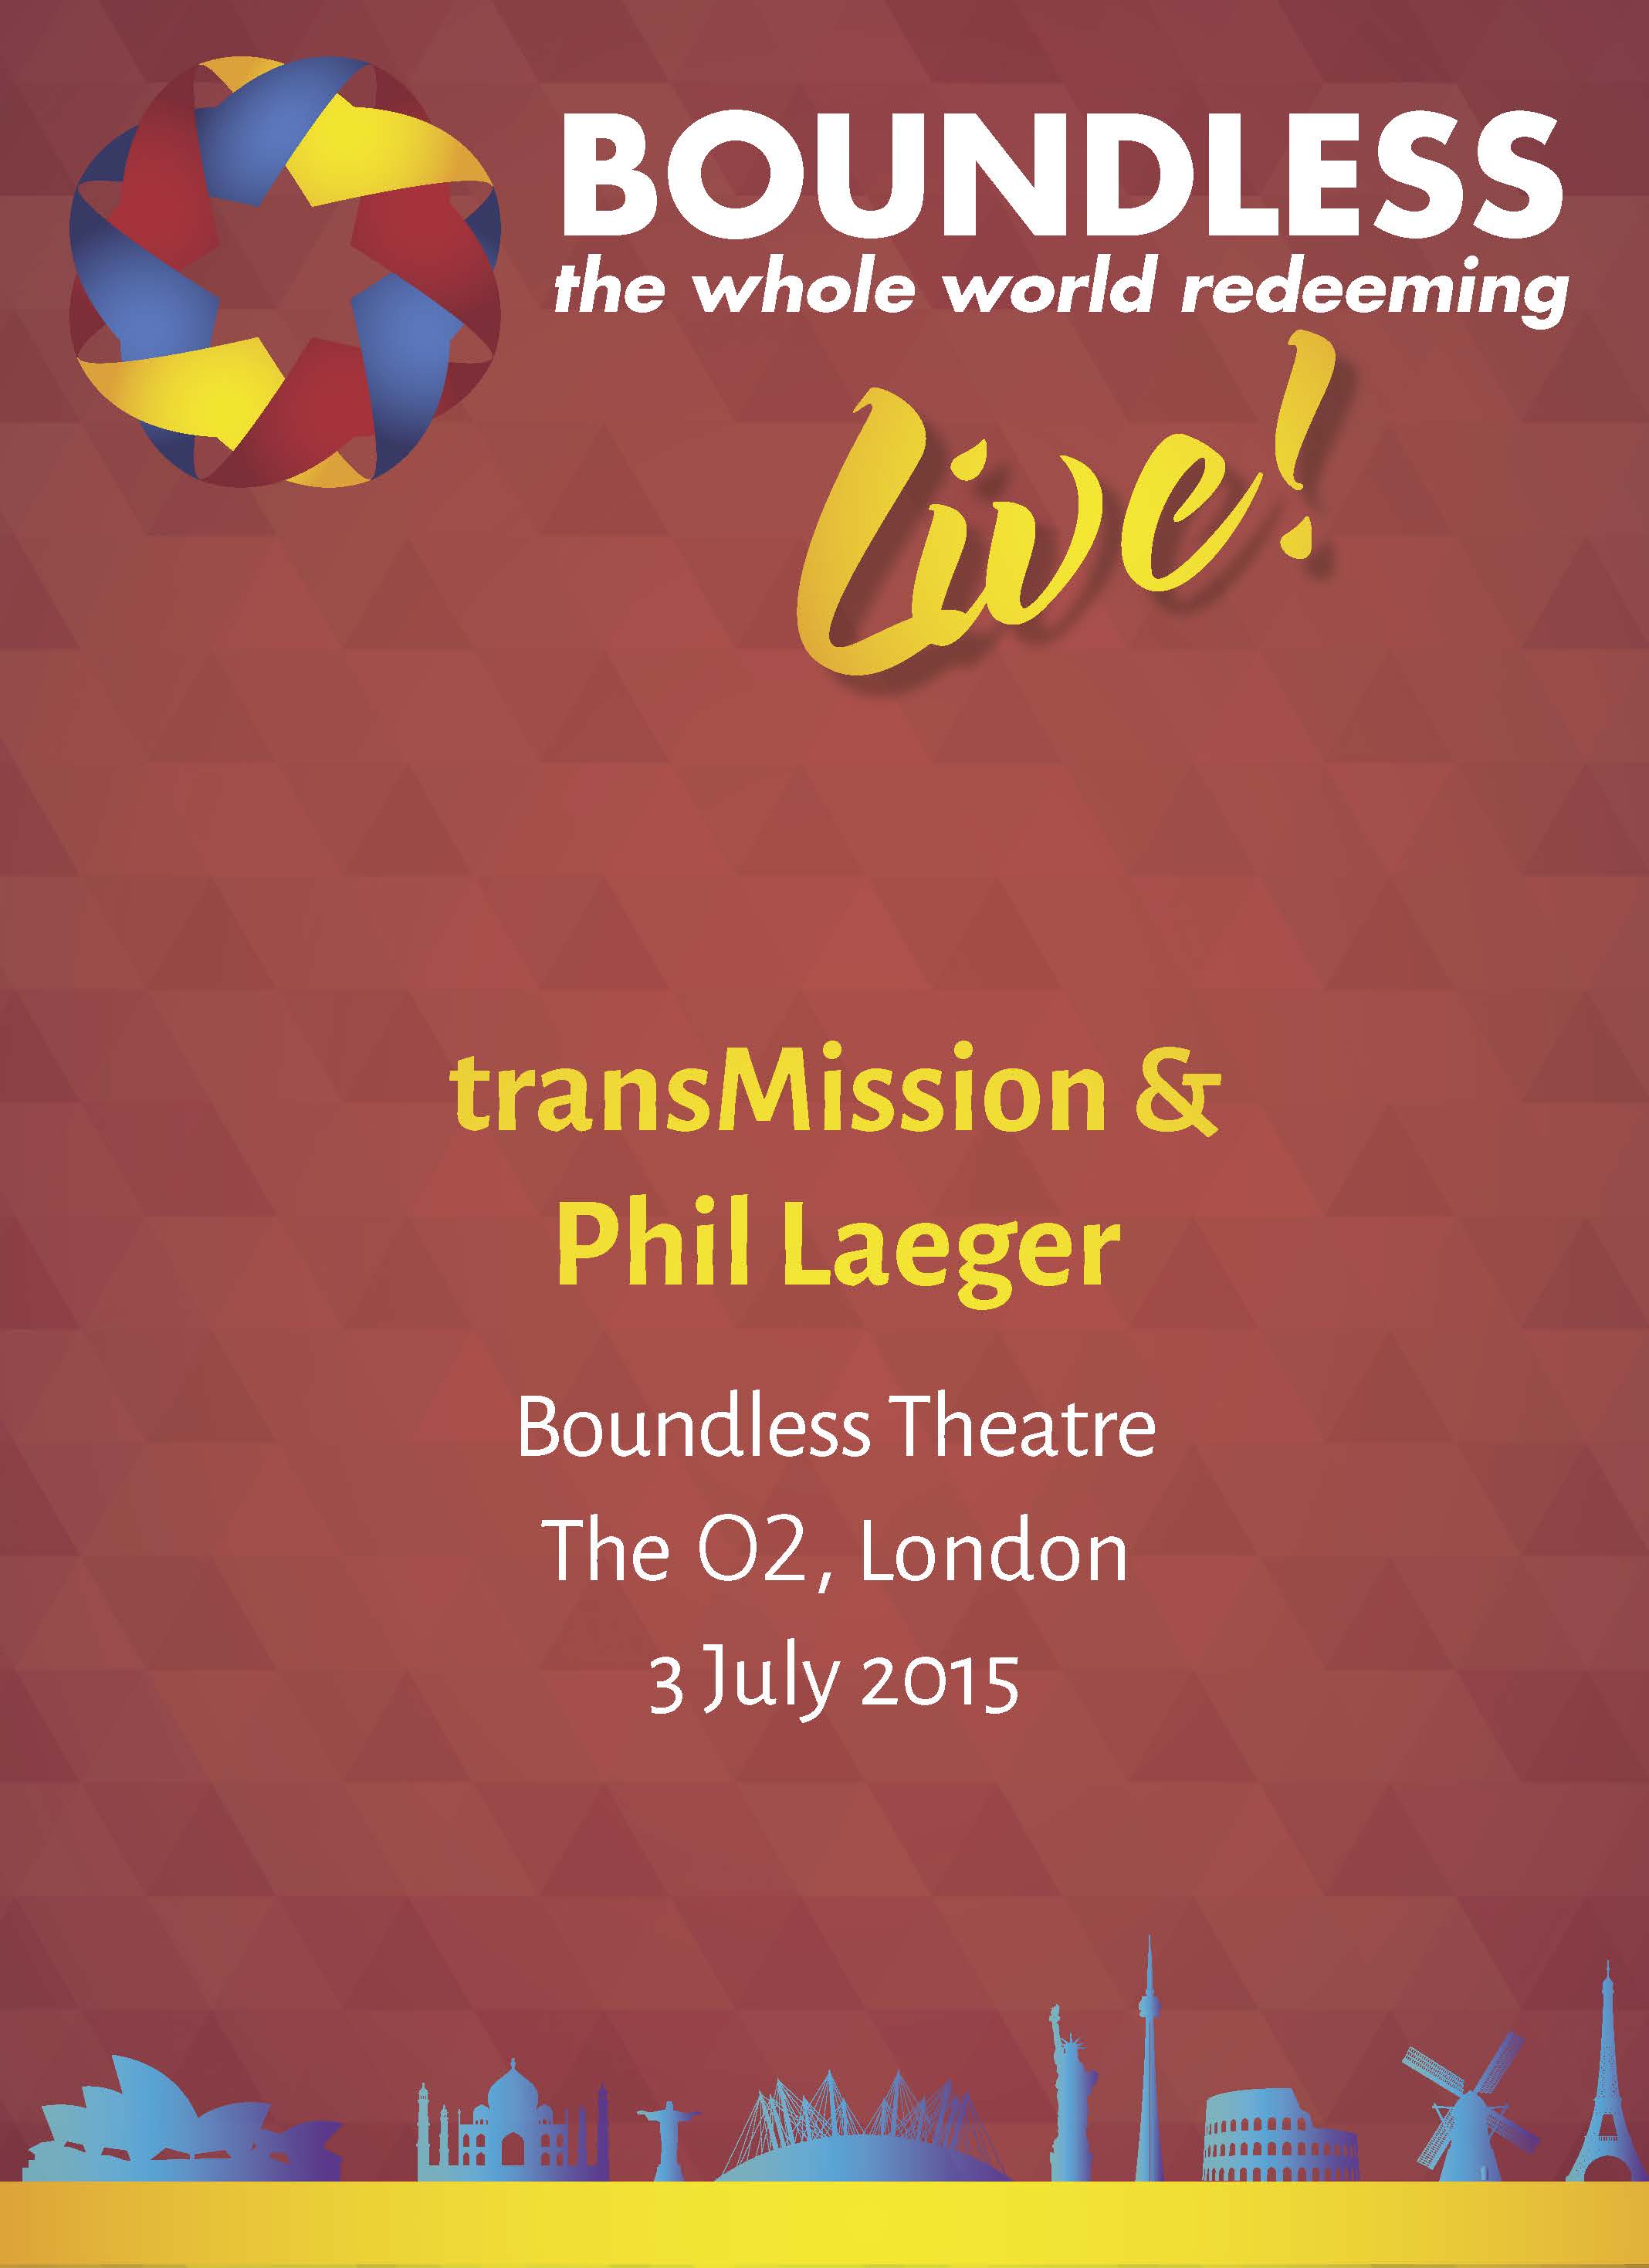 Boundless Live! Concert - transMission and Phil Laeger